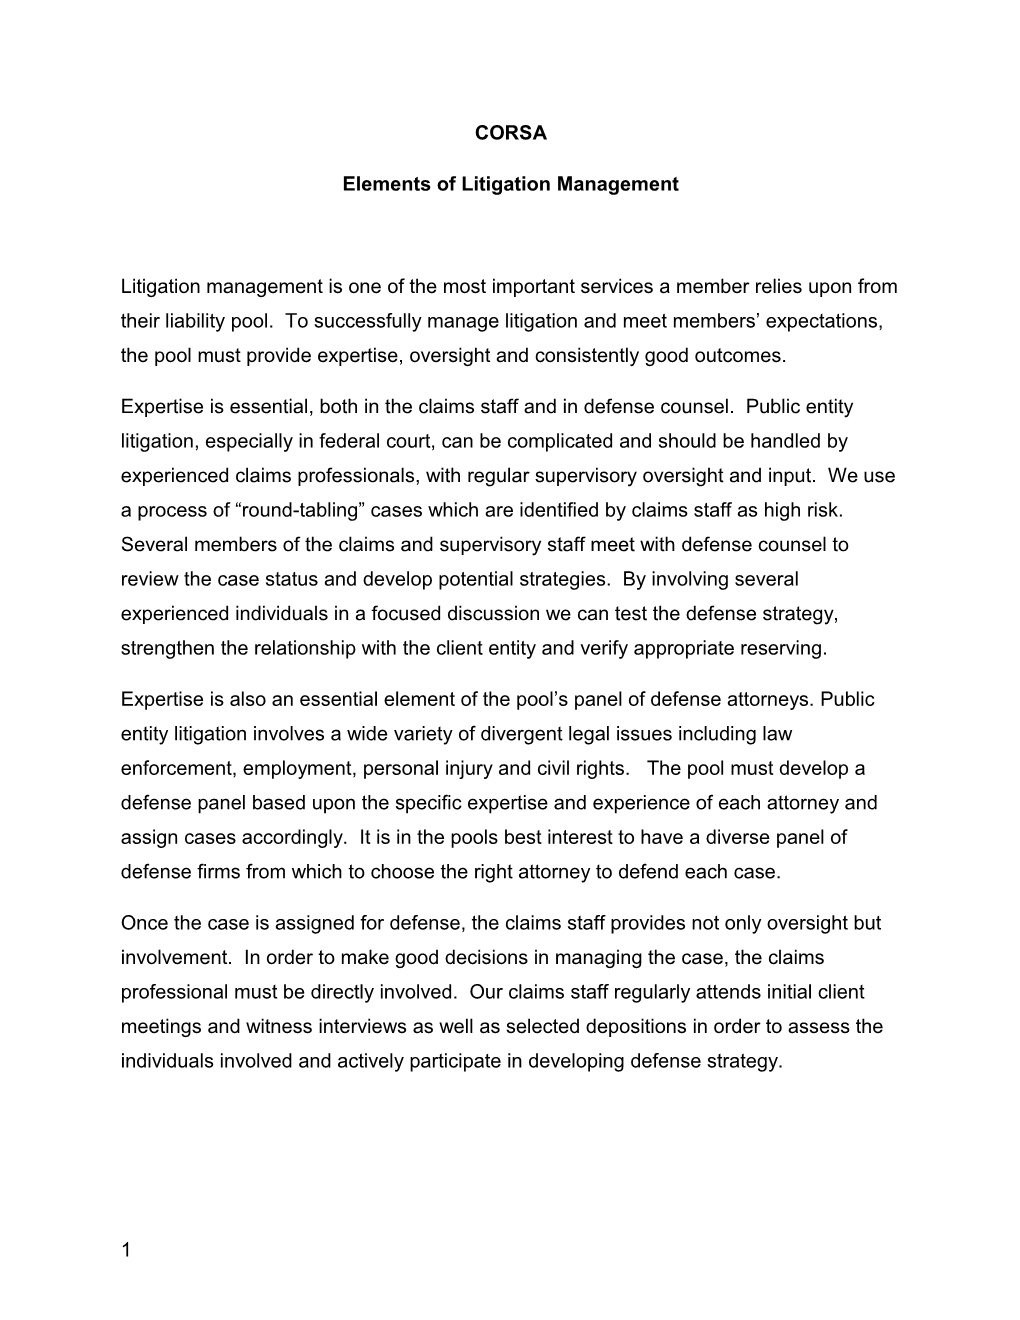 Elements of Litigation Management